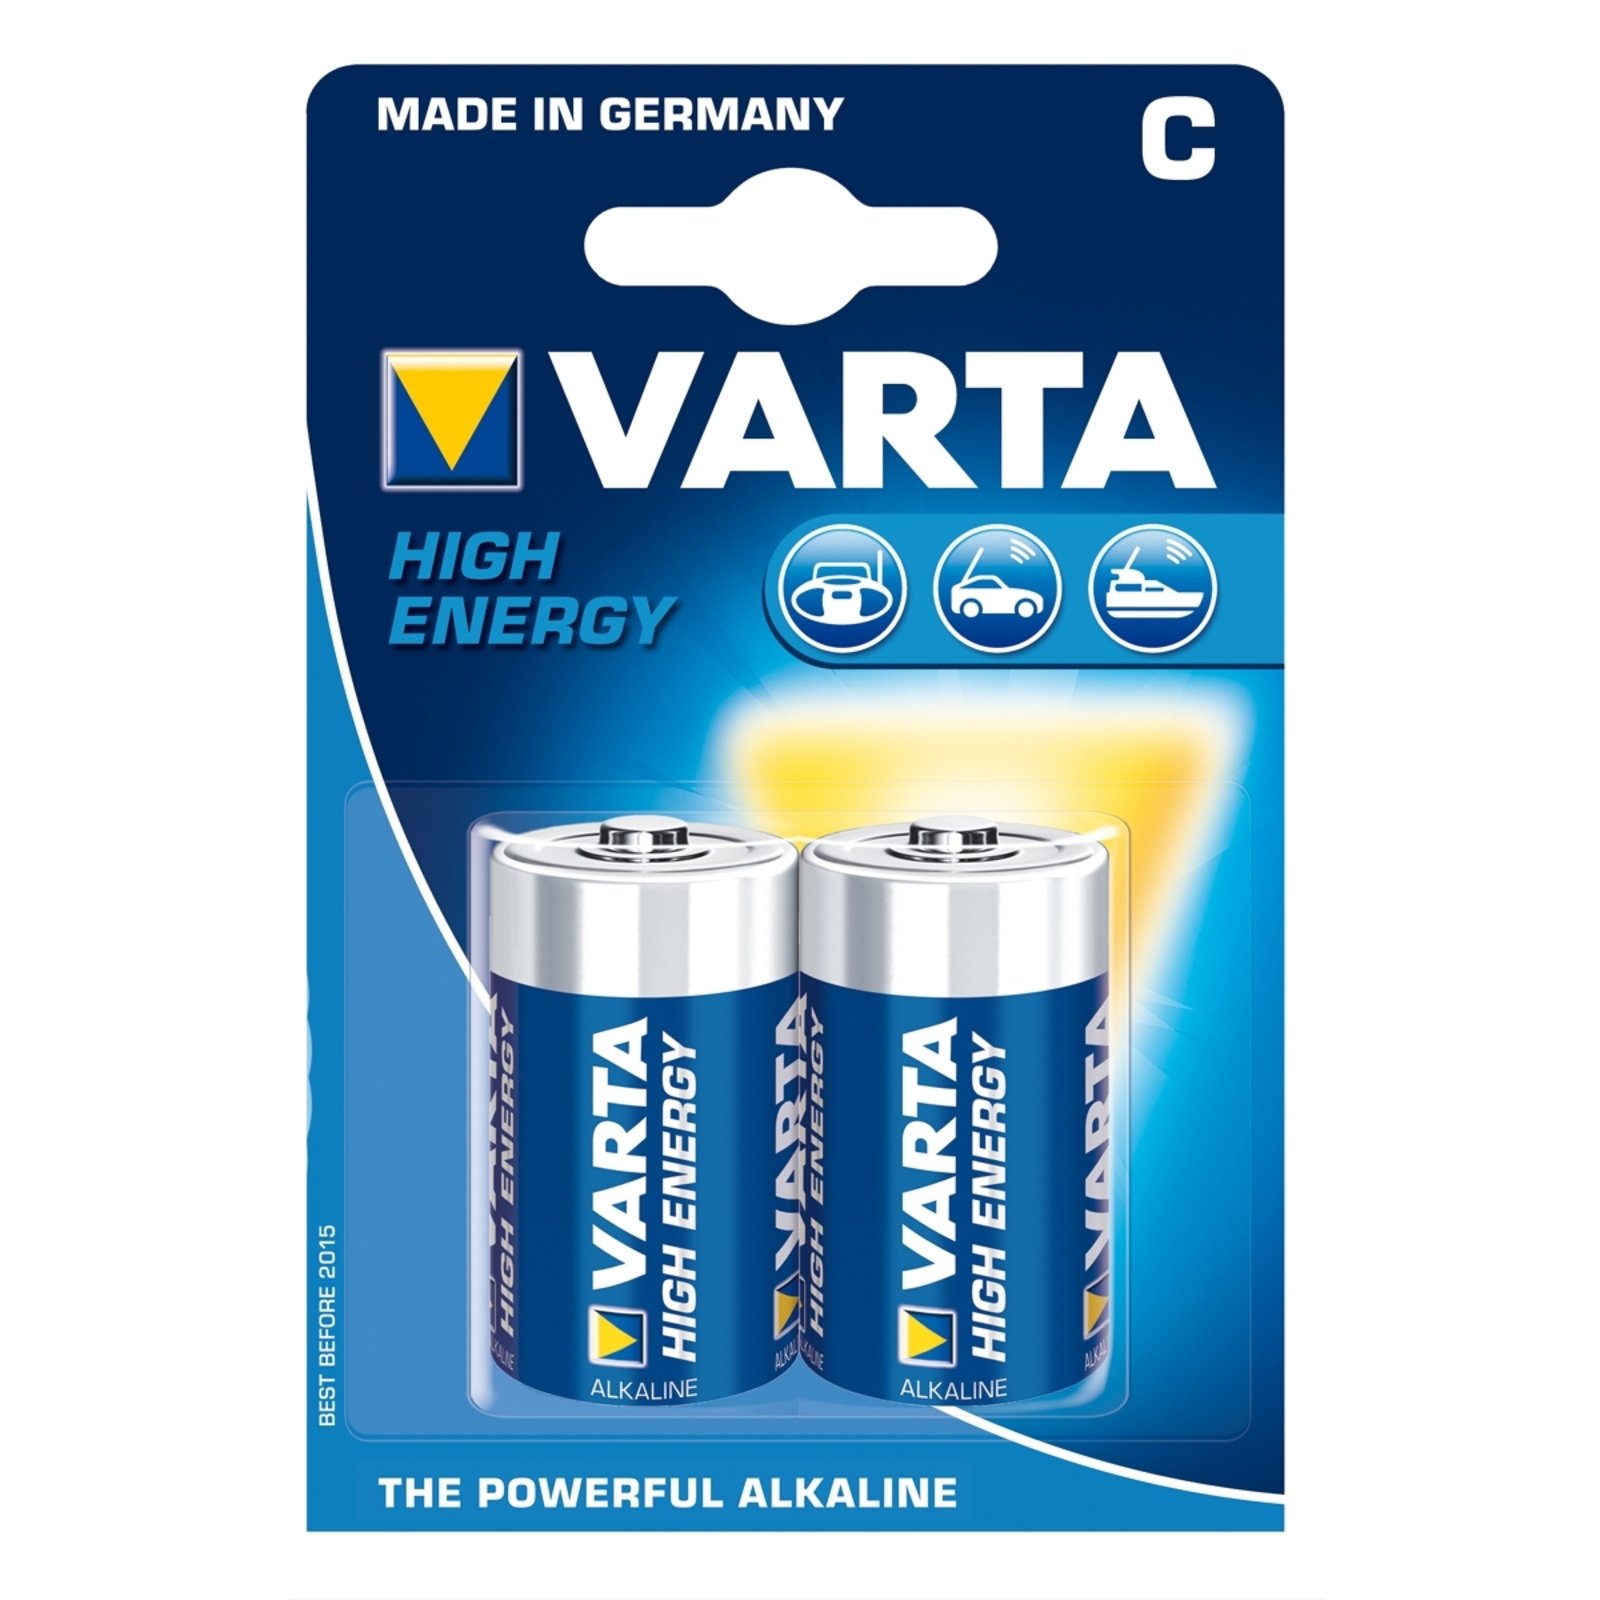 VARTA High Energy Baby 4914 - C batteries